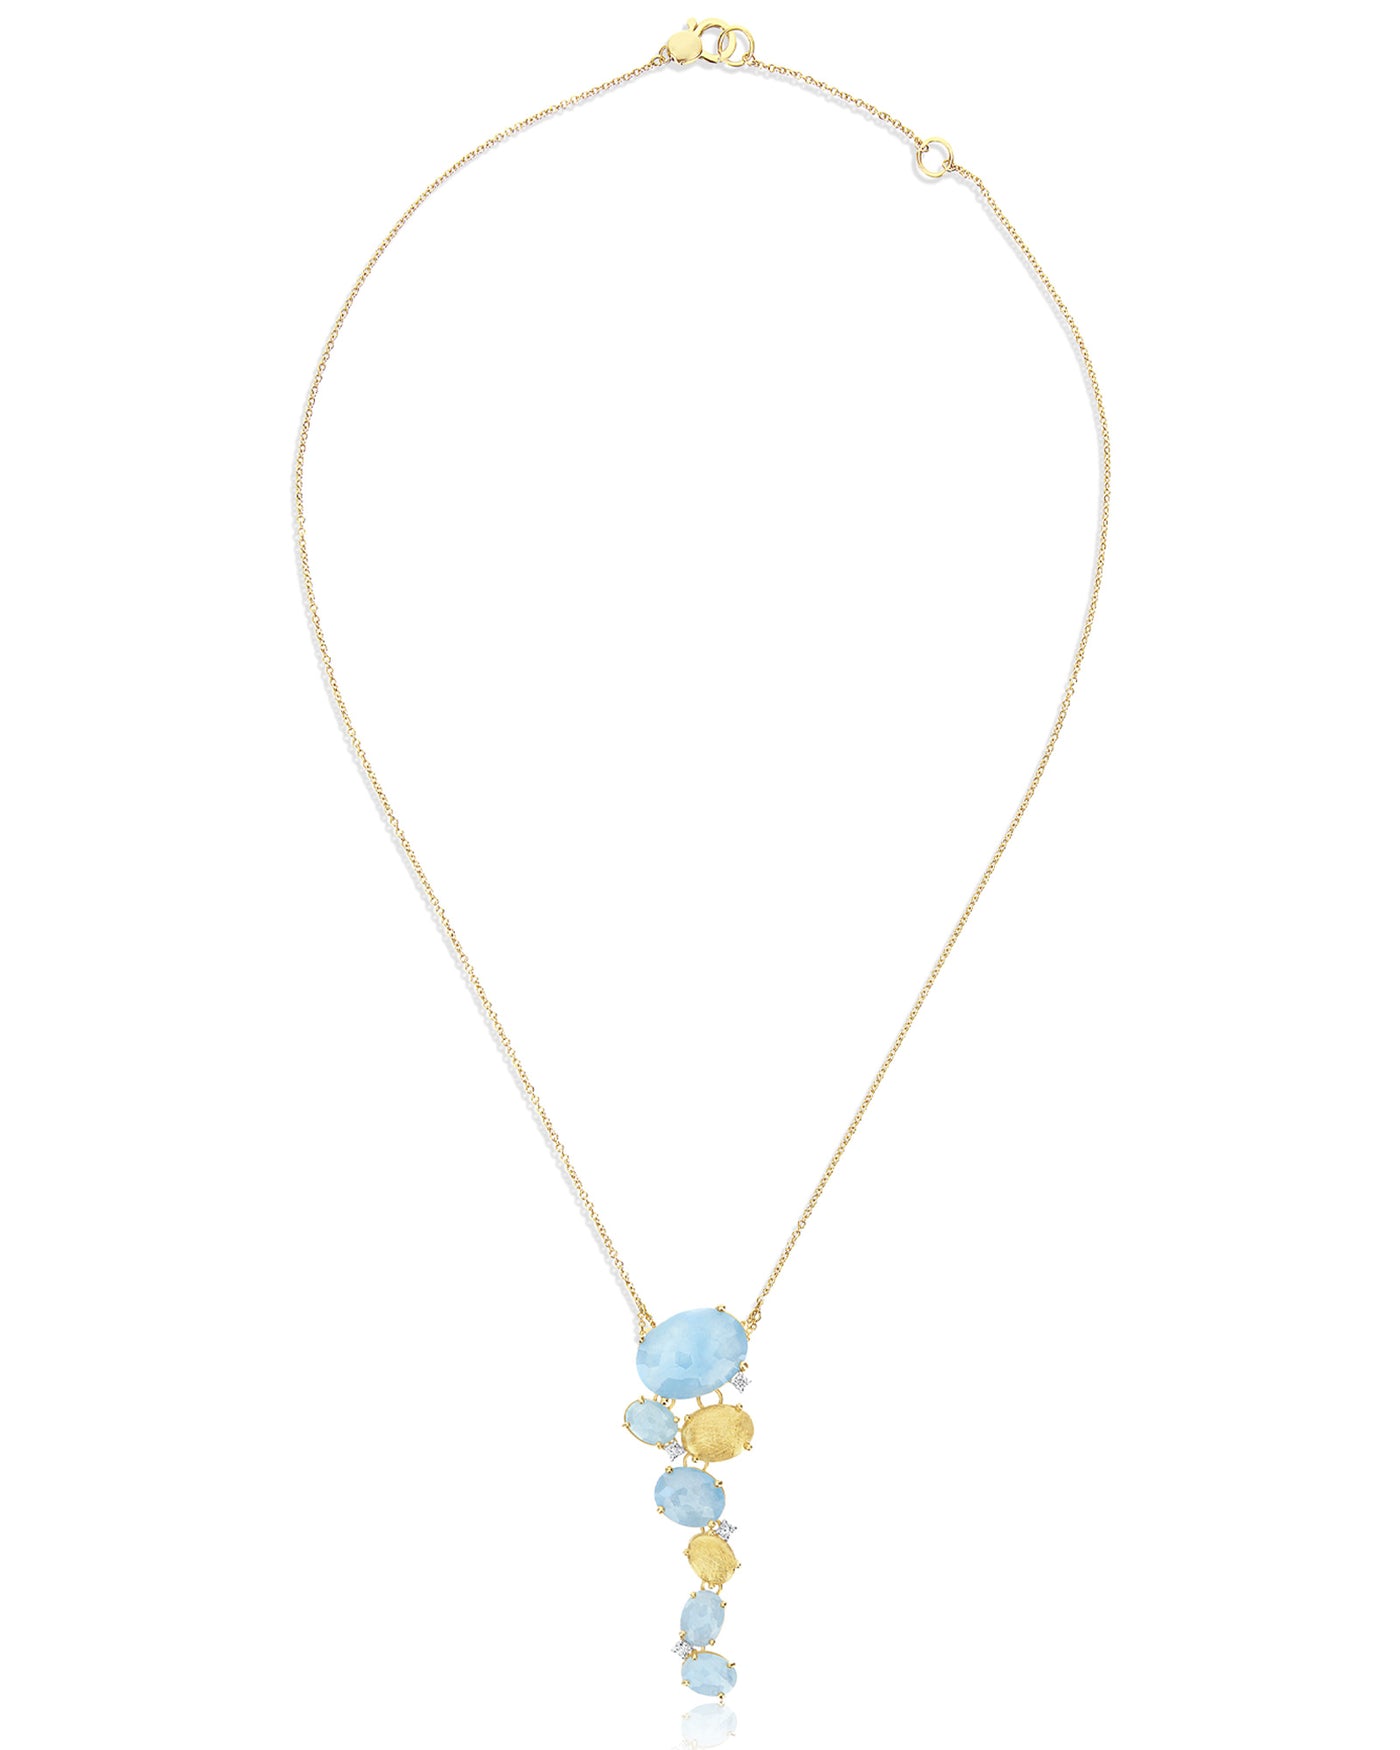 "ipanema" gold, aquamarine and diamonds necklace